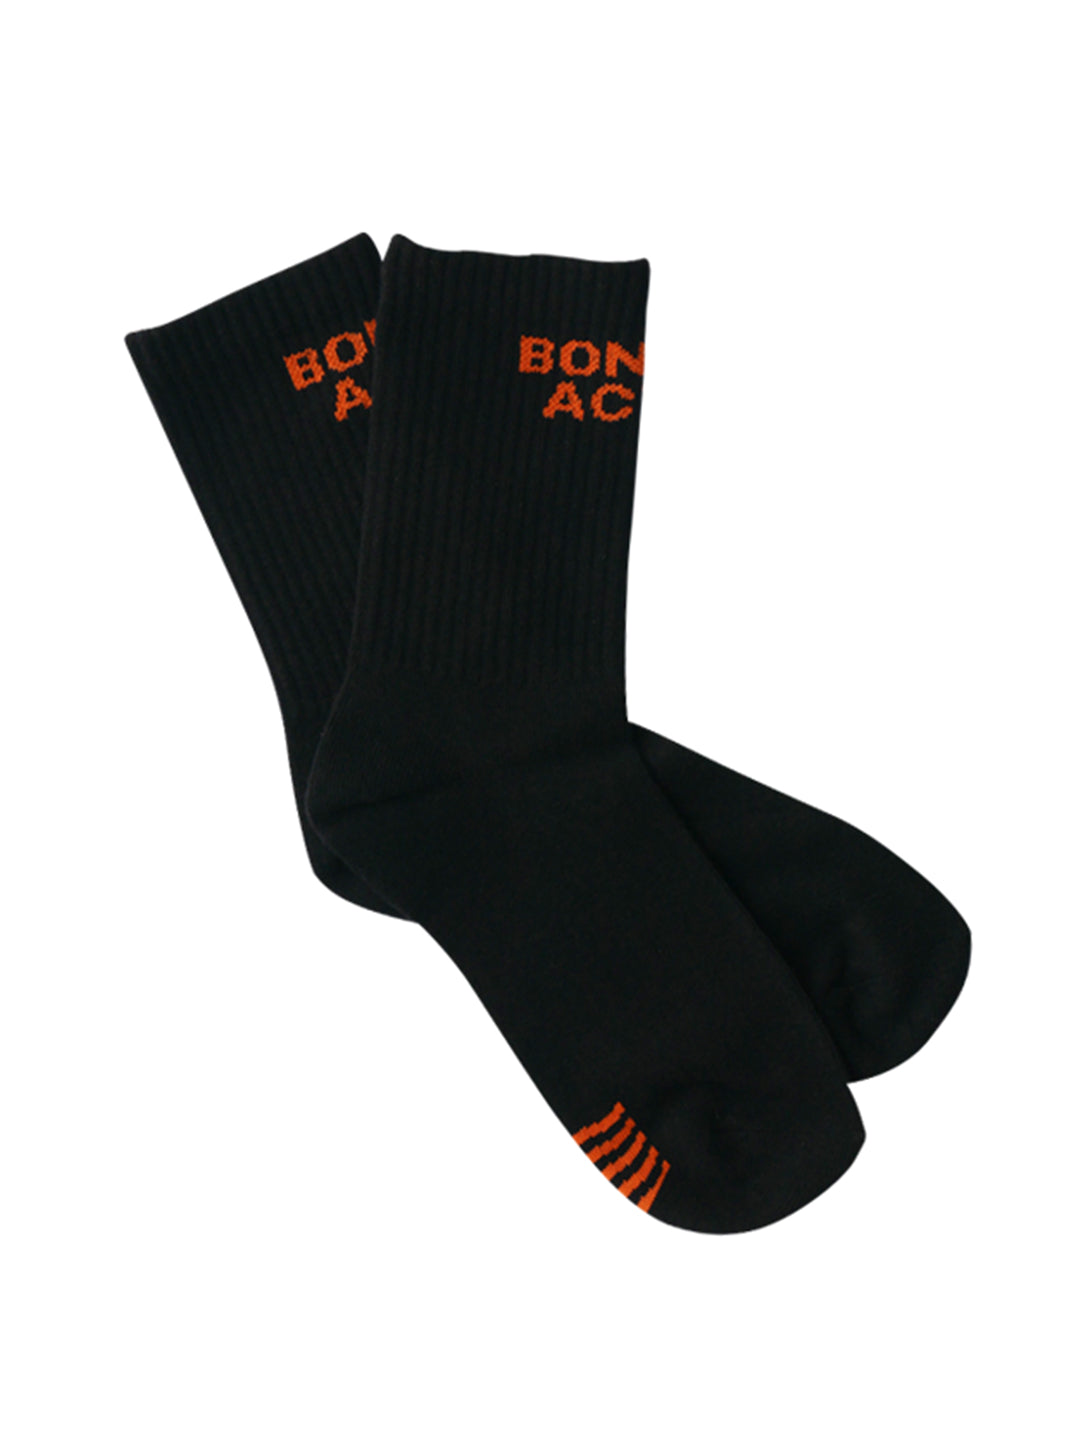 Unisex Active Socks (Black/Burnt Apricot)